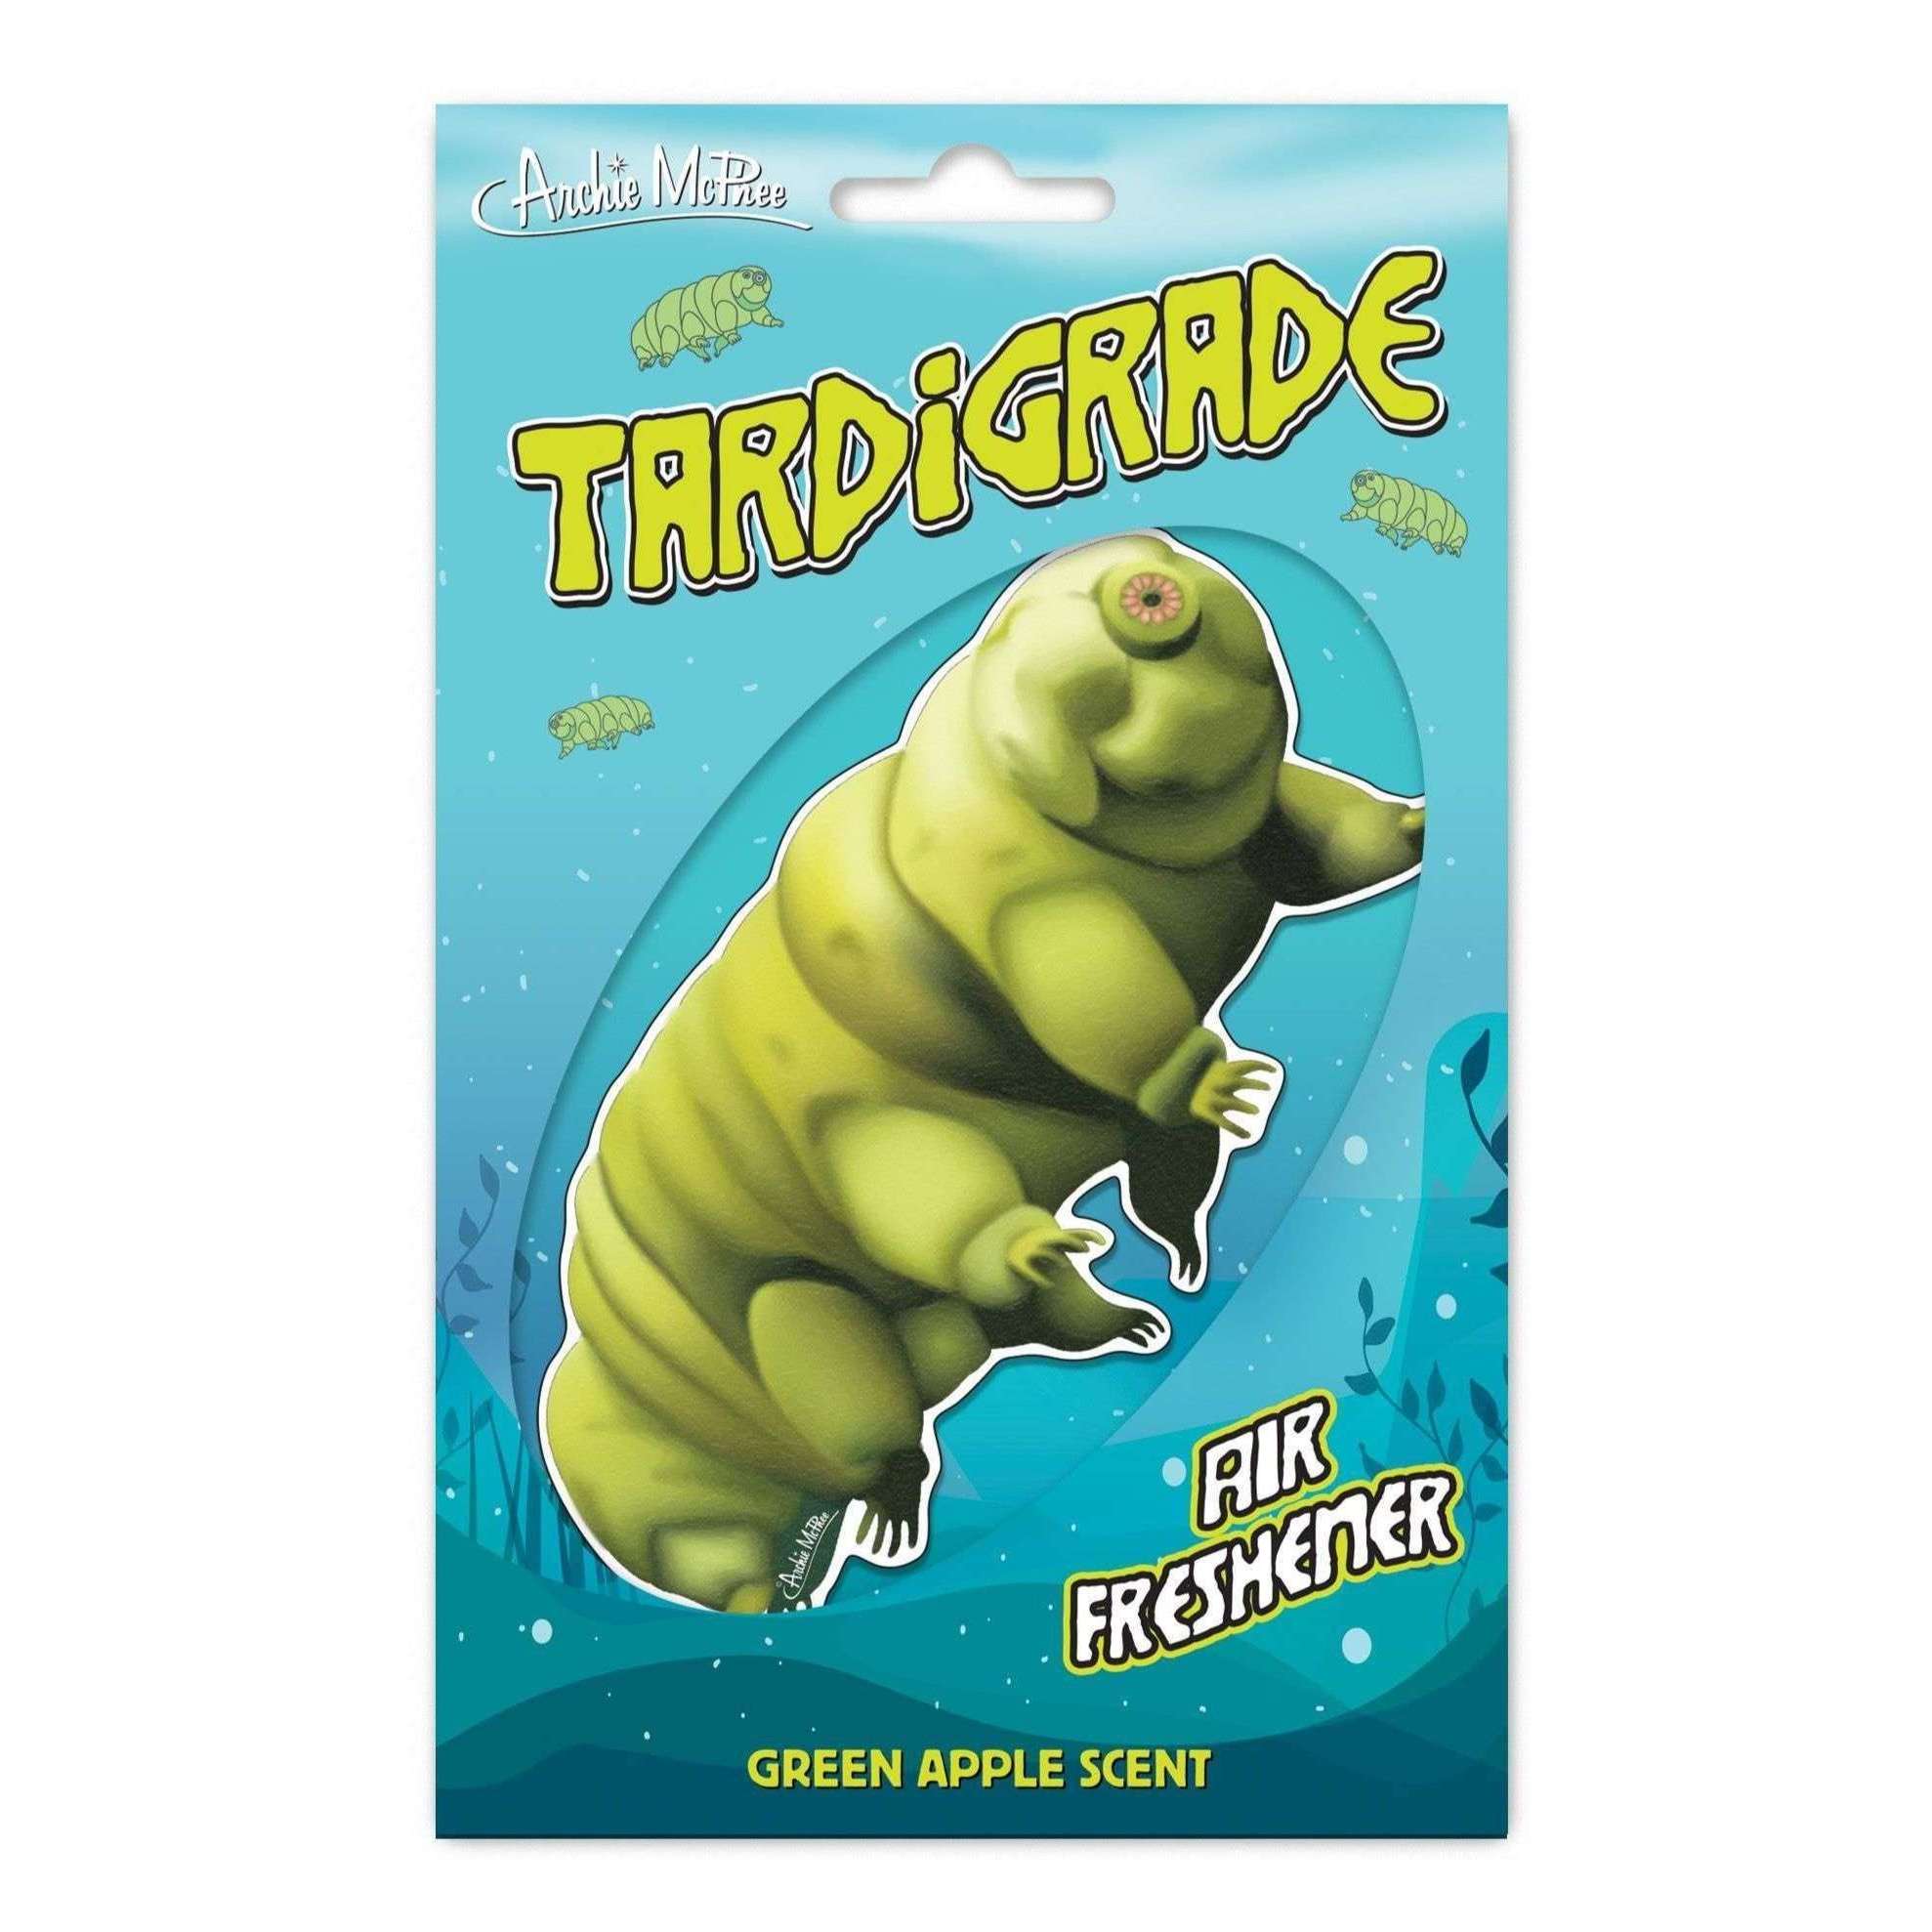 Tardigrade Green Apple Scented Air Freshener